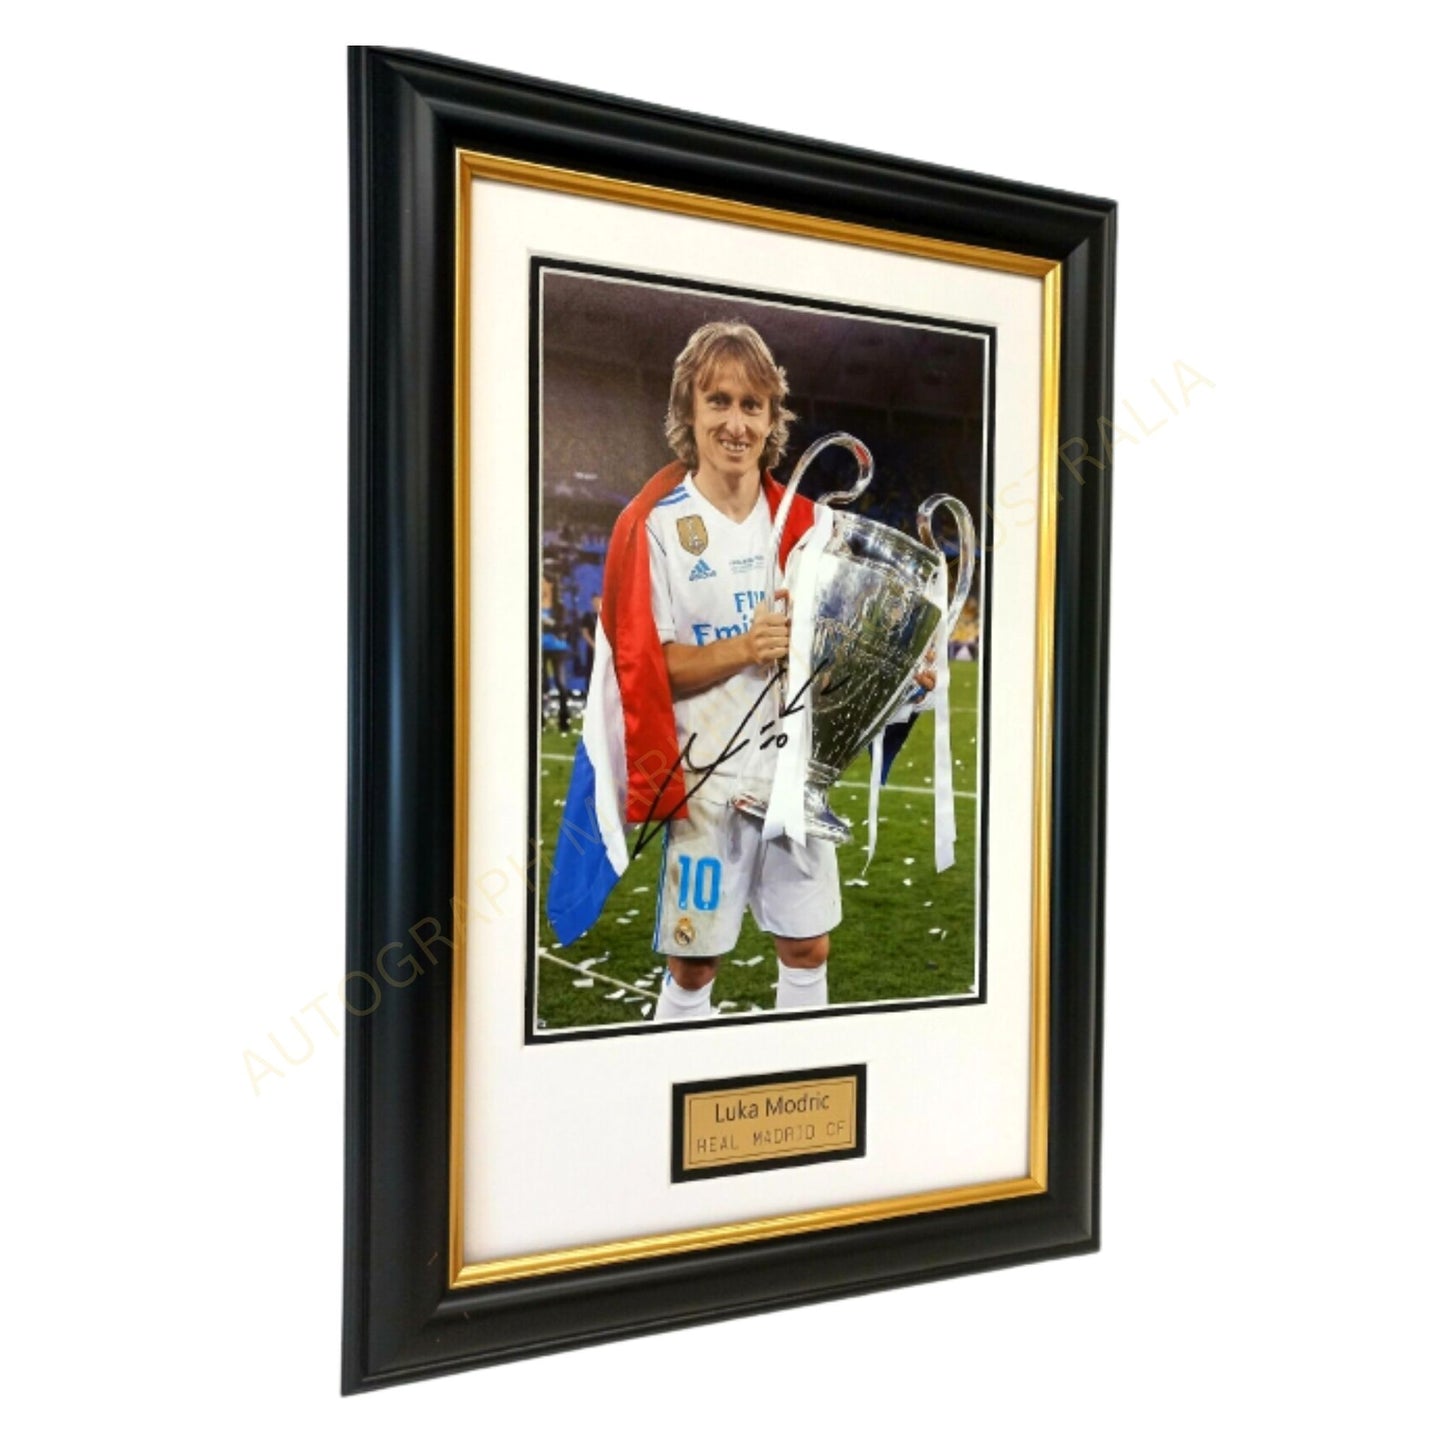 Luca Modric Real Madrid CF Signed Framed Photo Print Soccer Memorabilia